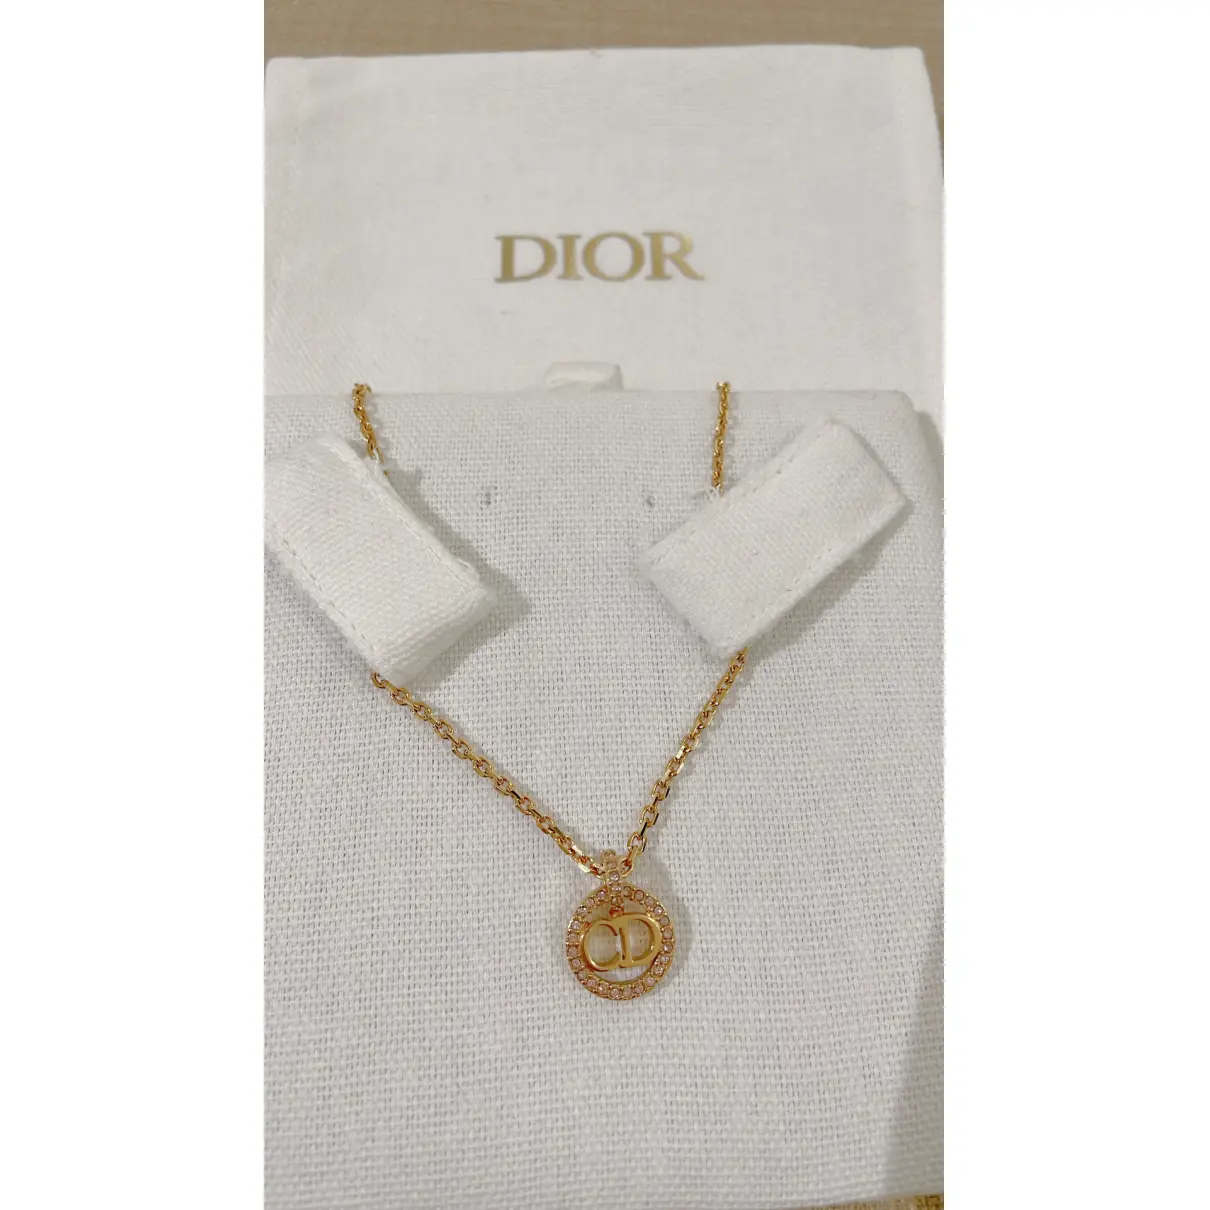 Buy Dior Petit CD pink gold necklace online